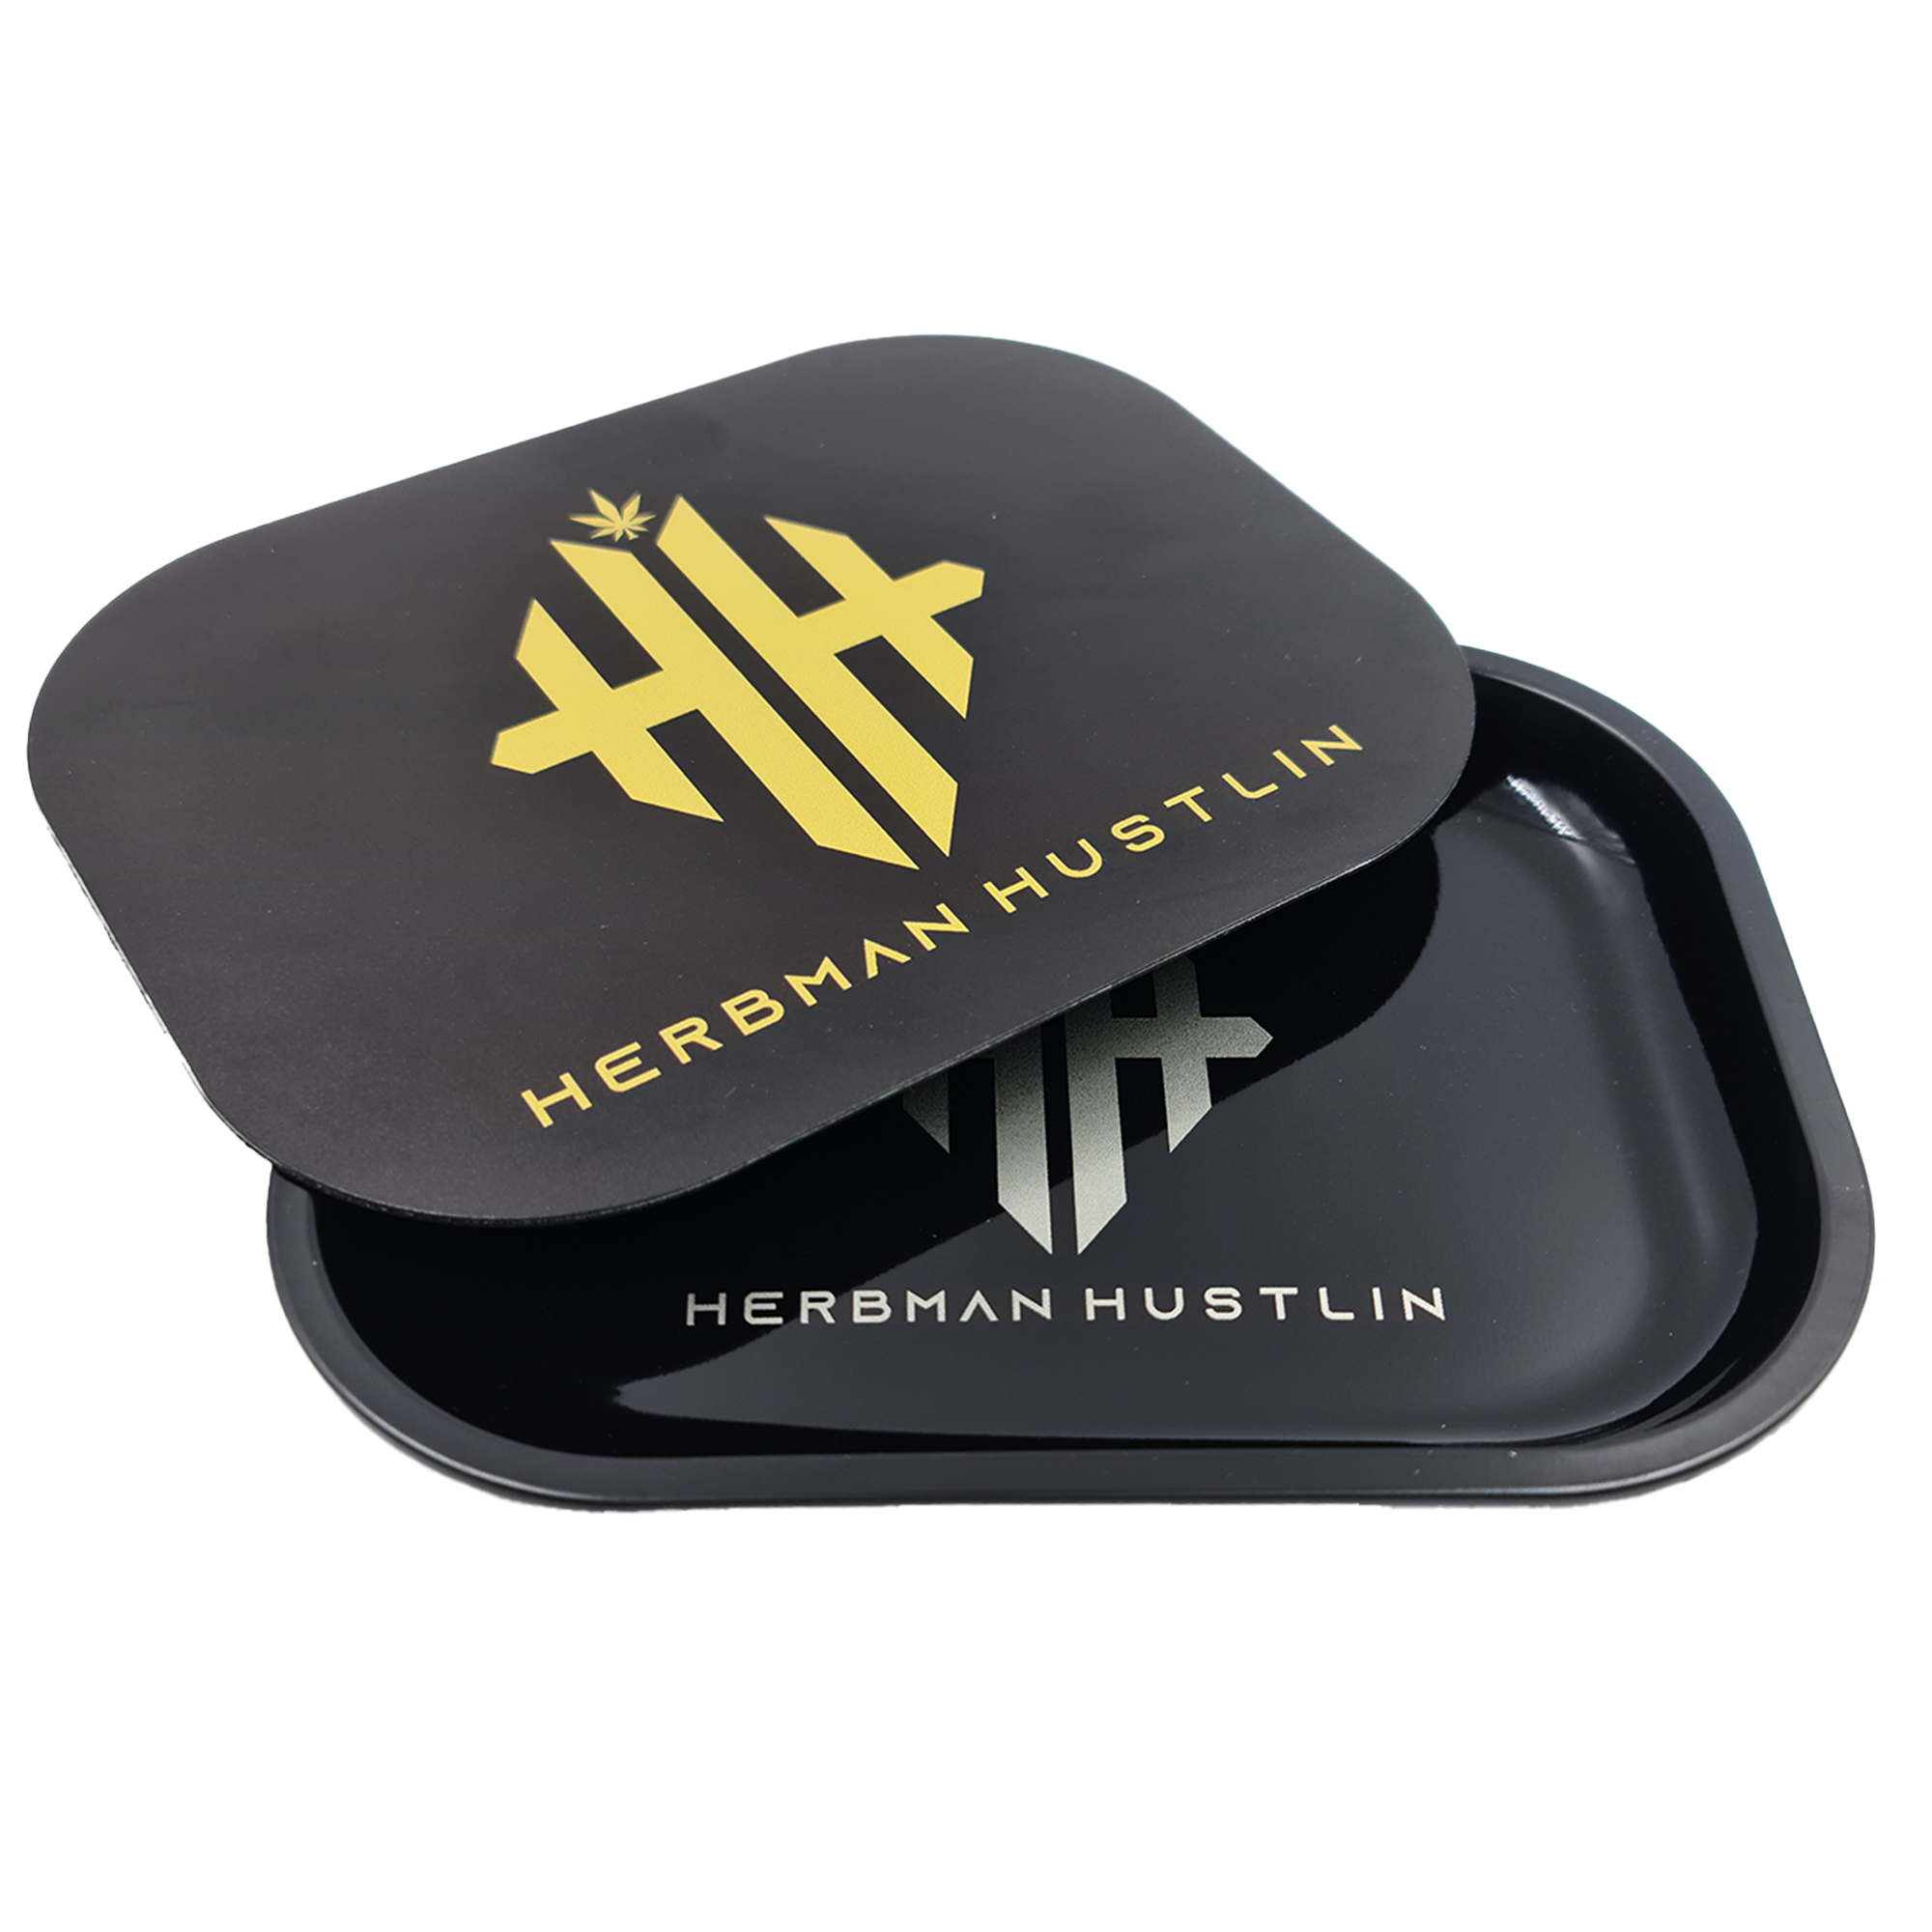 Herbman Hustlin Monogram Magnetic Tray - Black/Gold